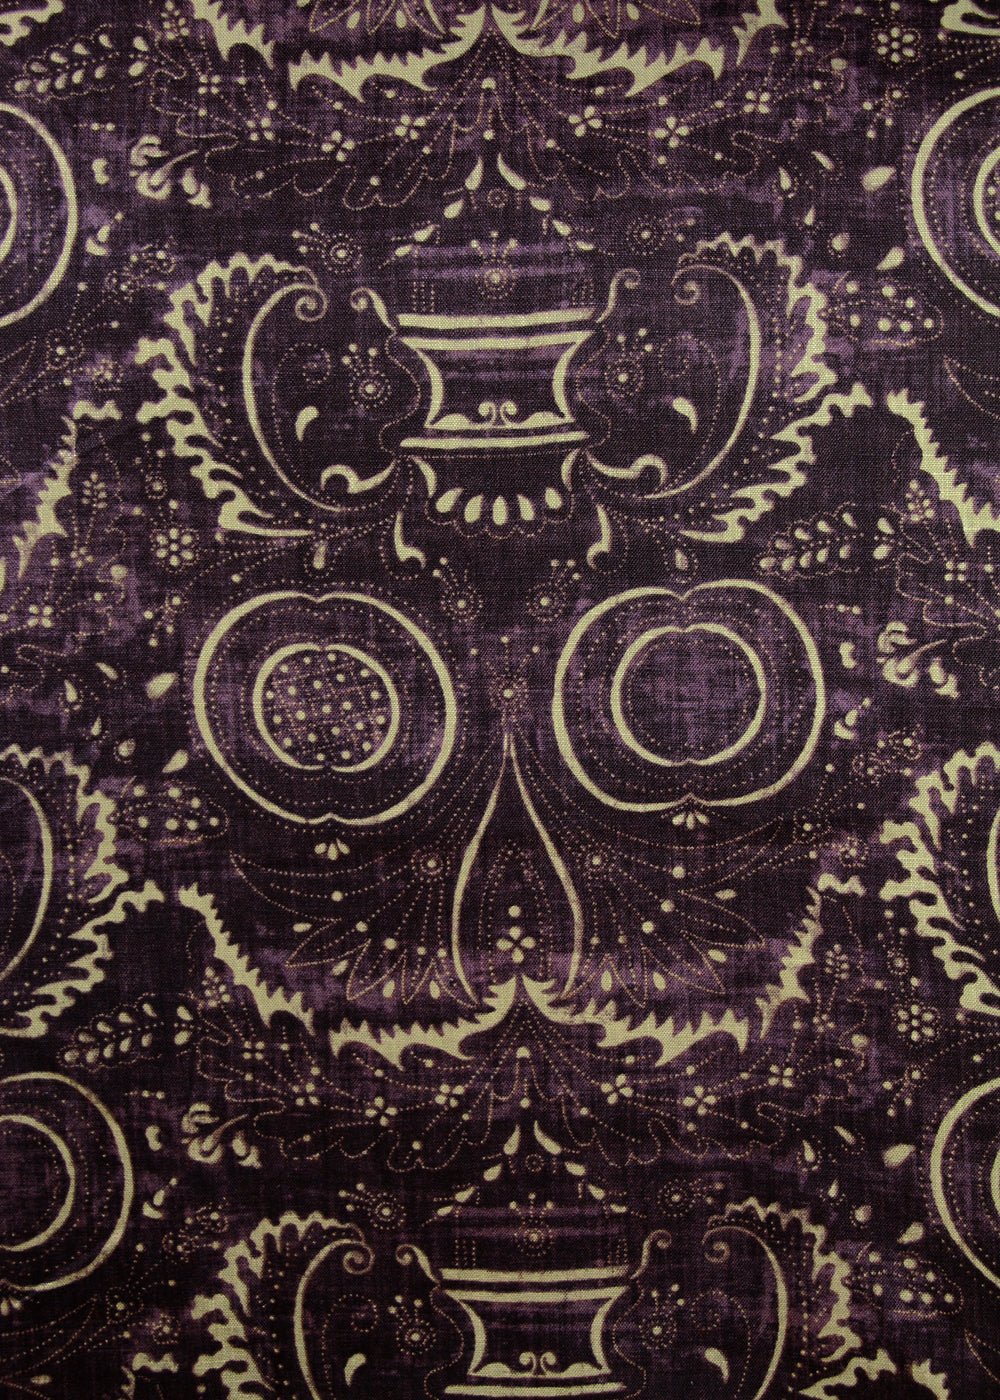 dark purple fabric with a swirly printed pattern